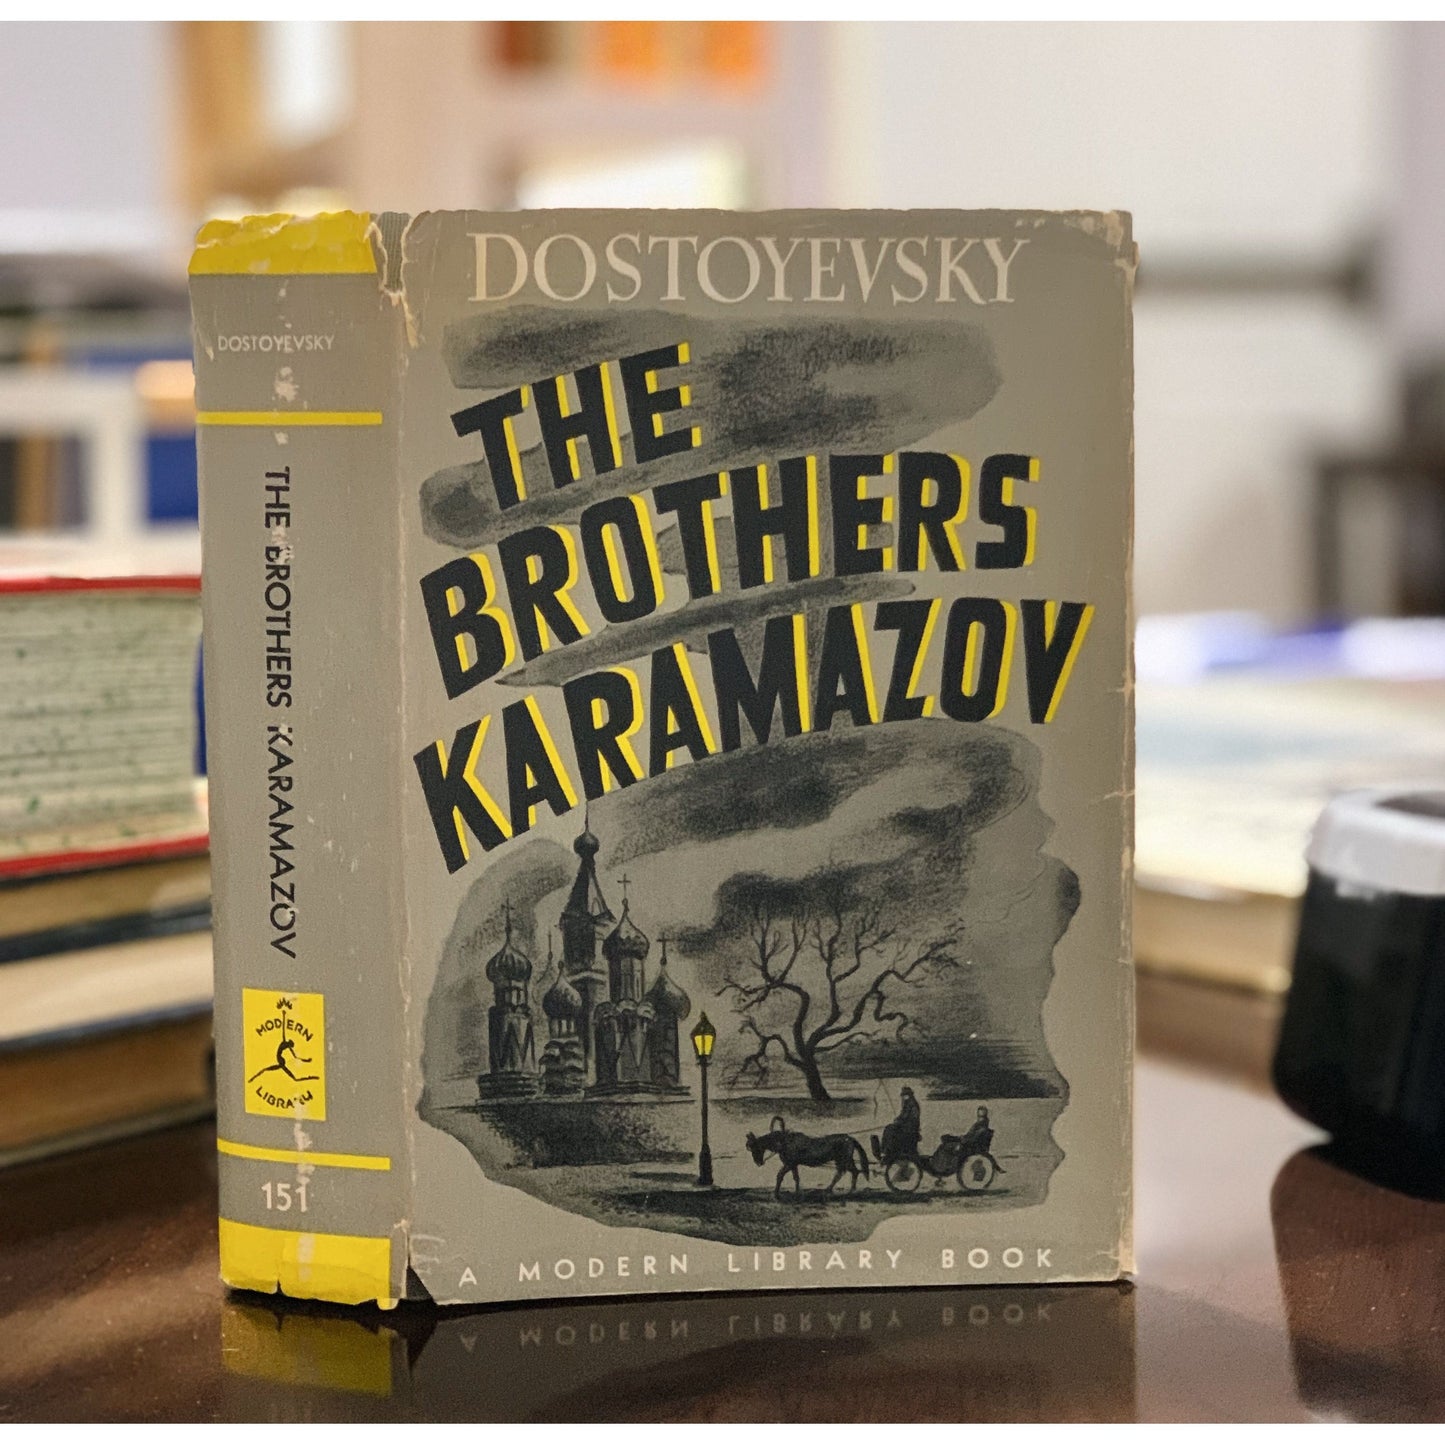 The Brothers Karamazov, Modern Library DJ Hardcover, 1950